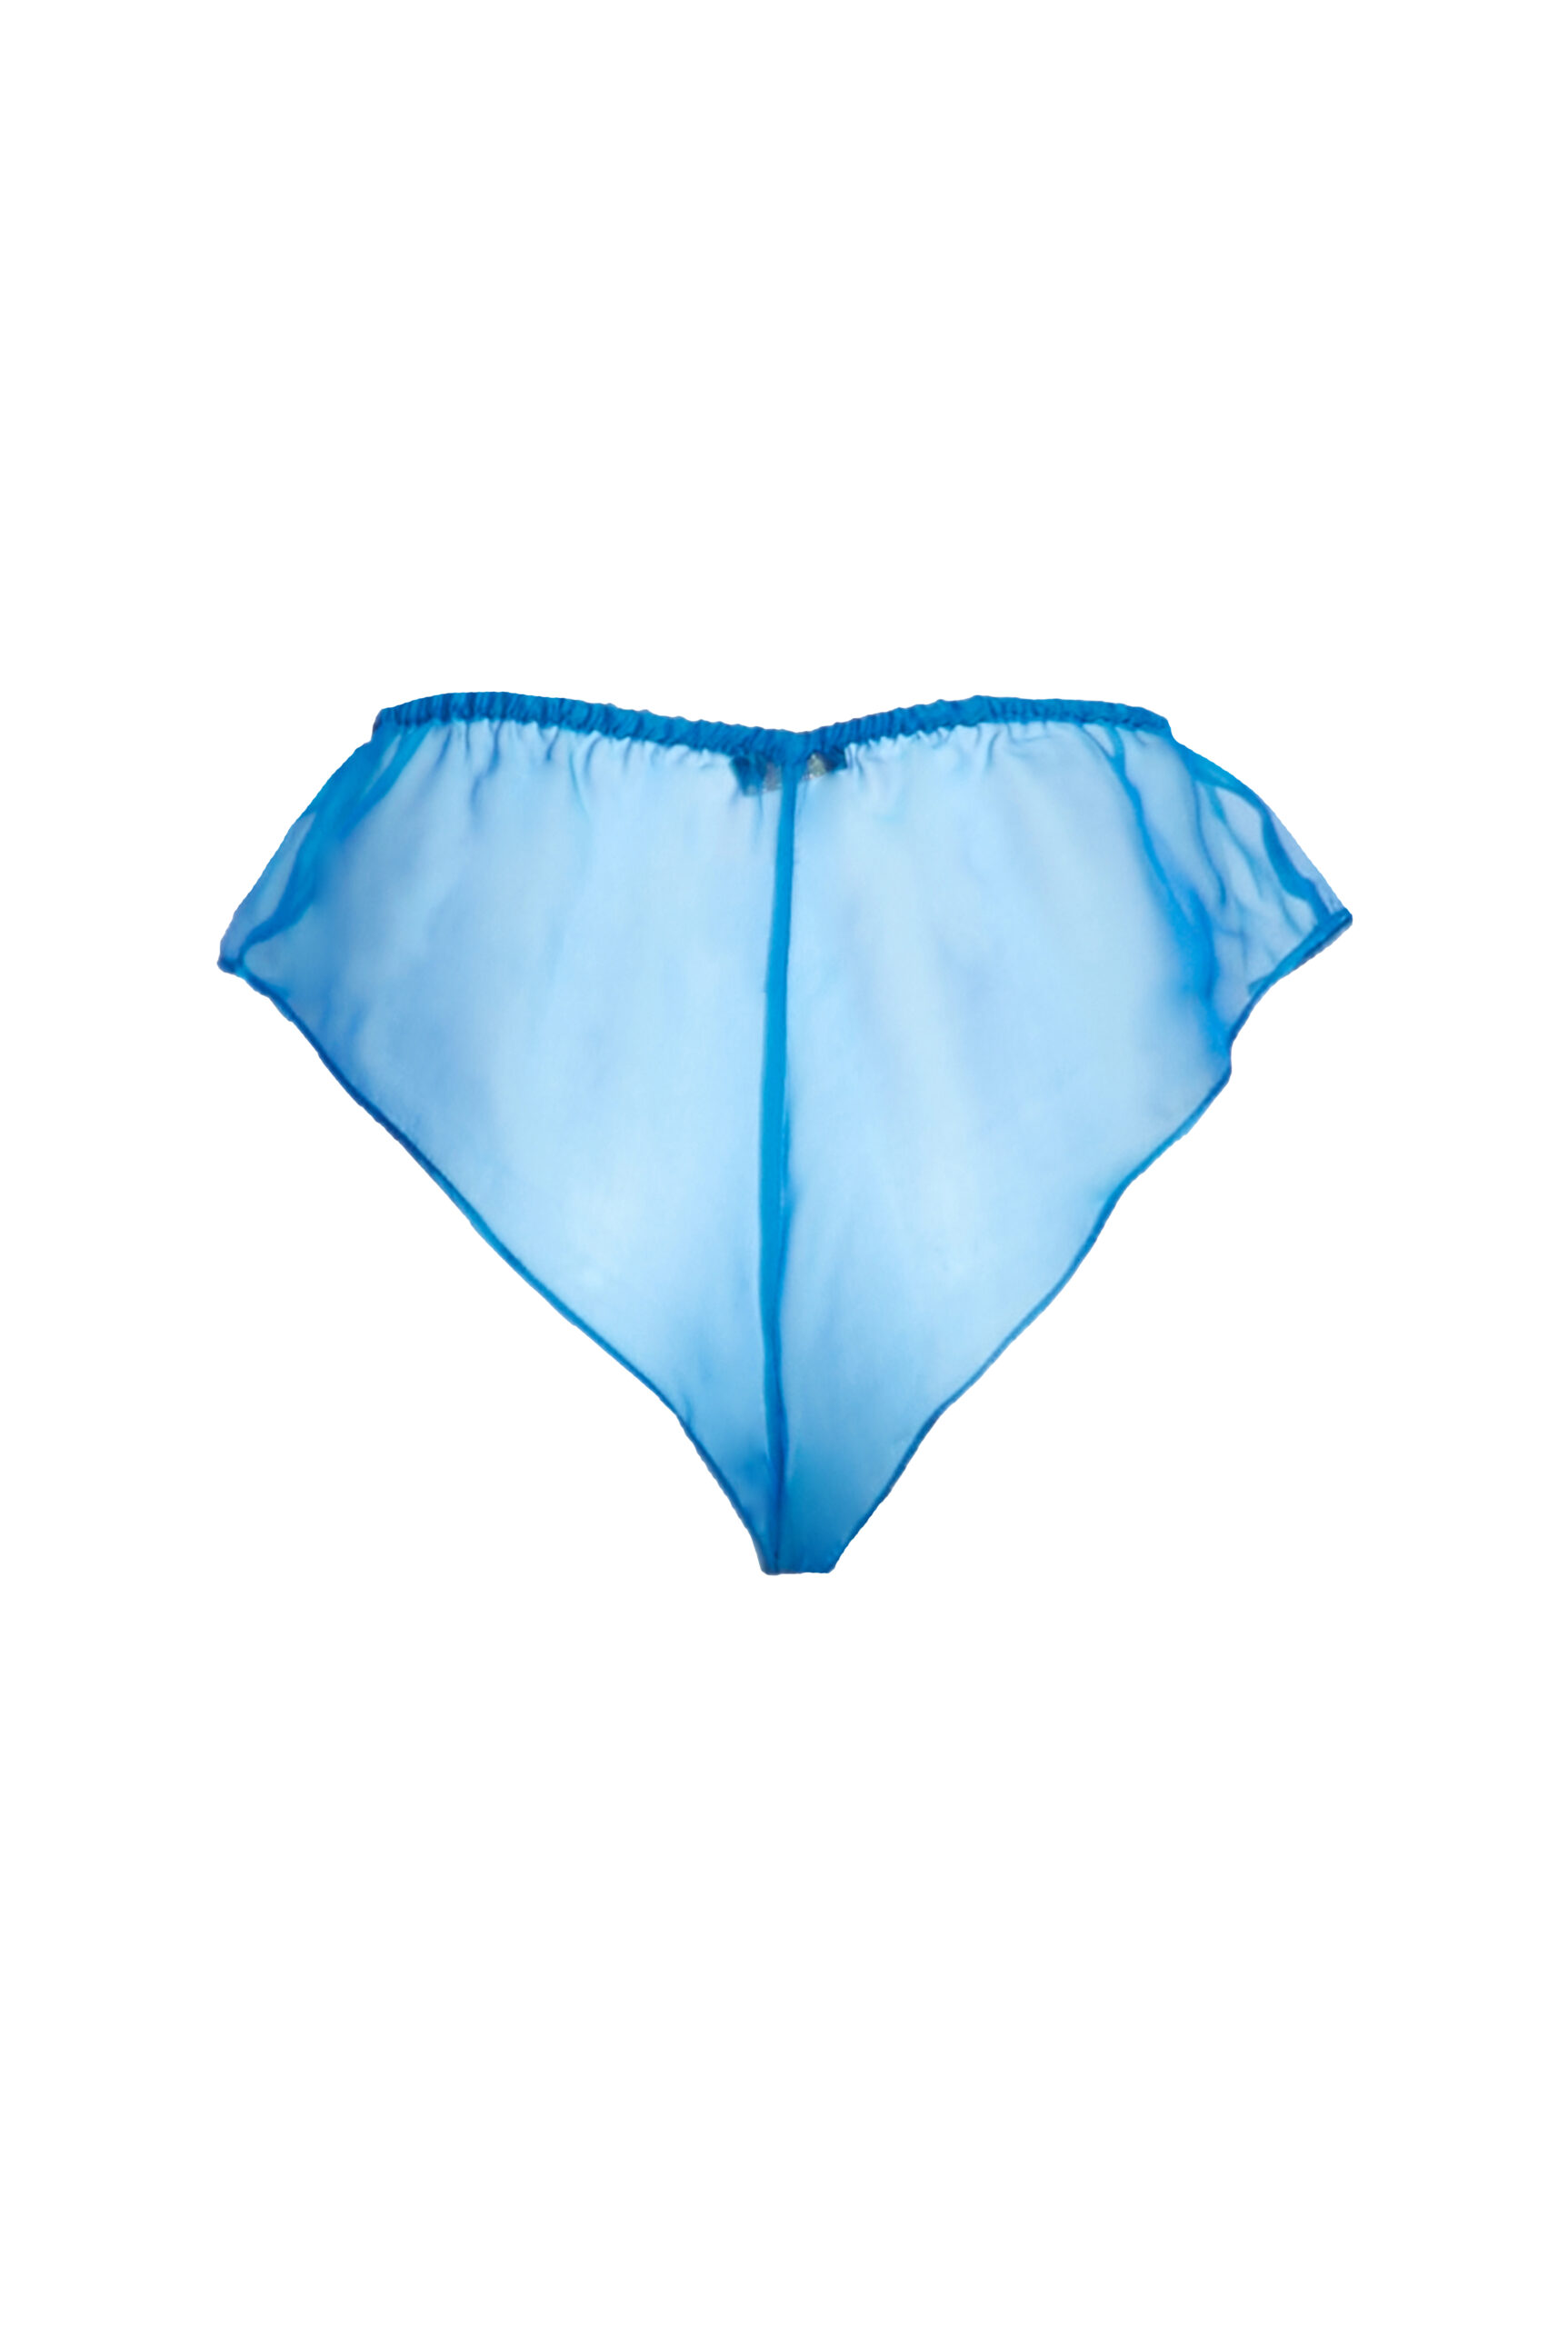 ROSAMOSARIO blue panties back copia